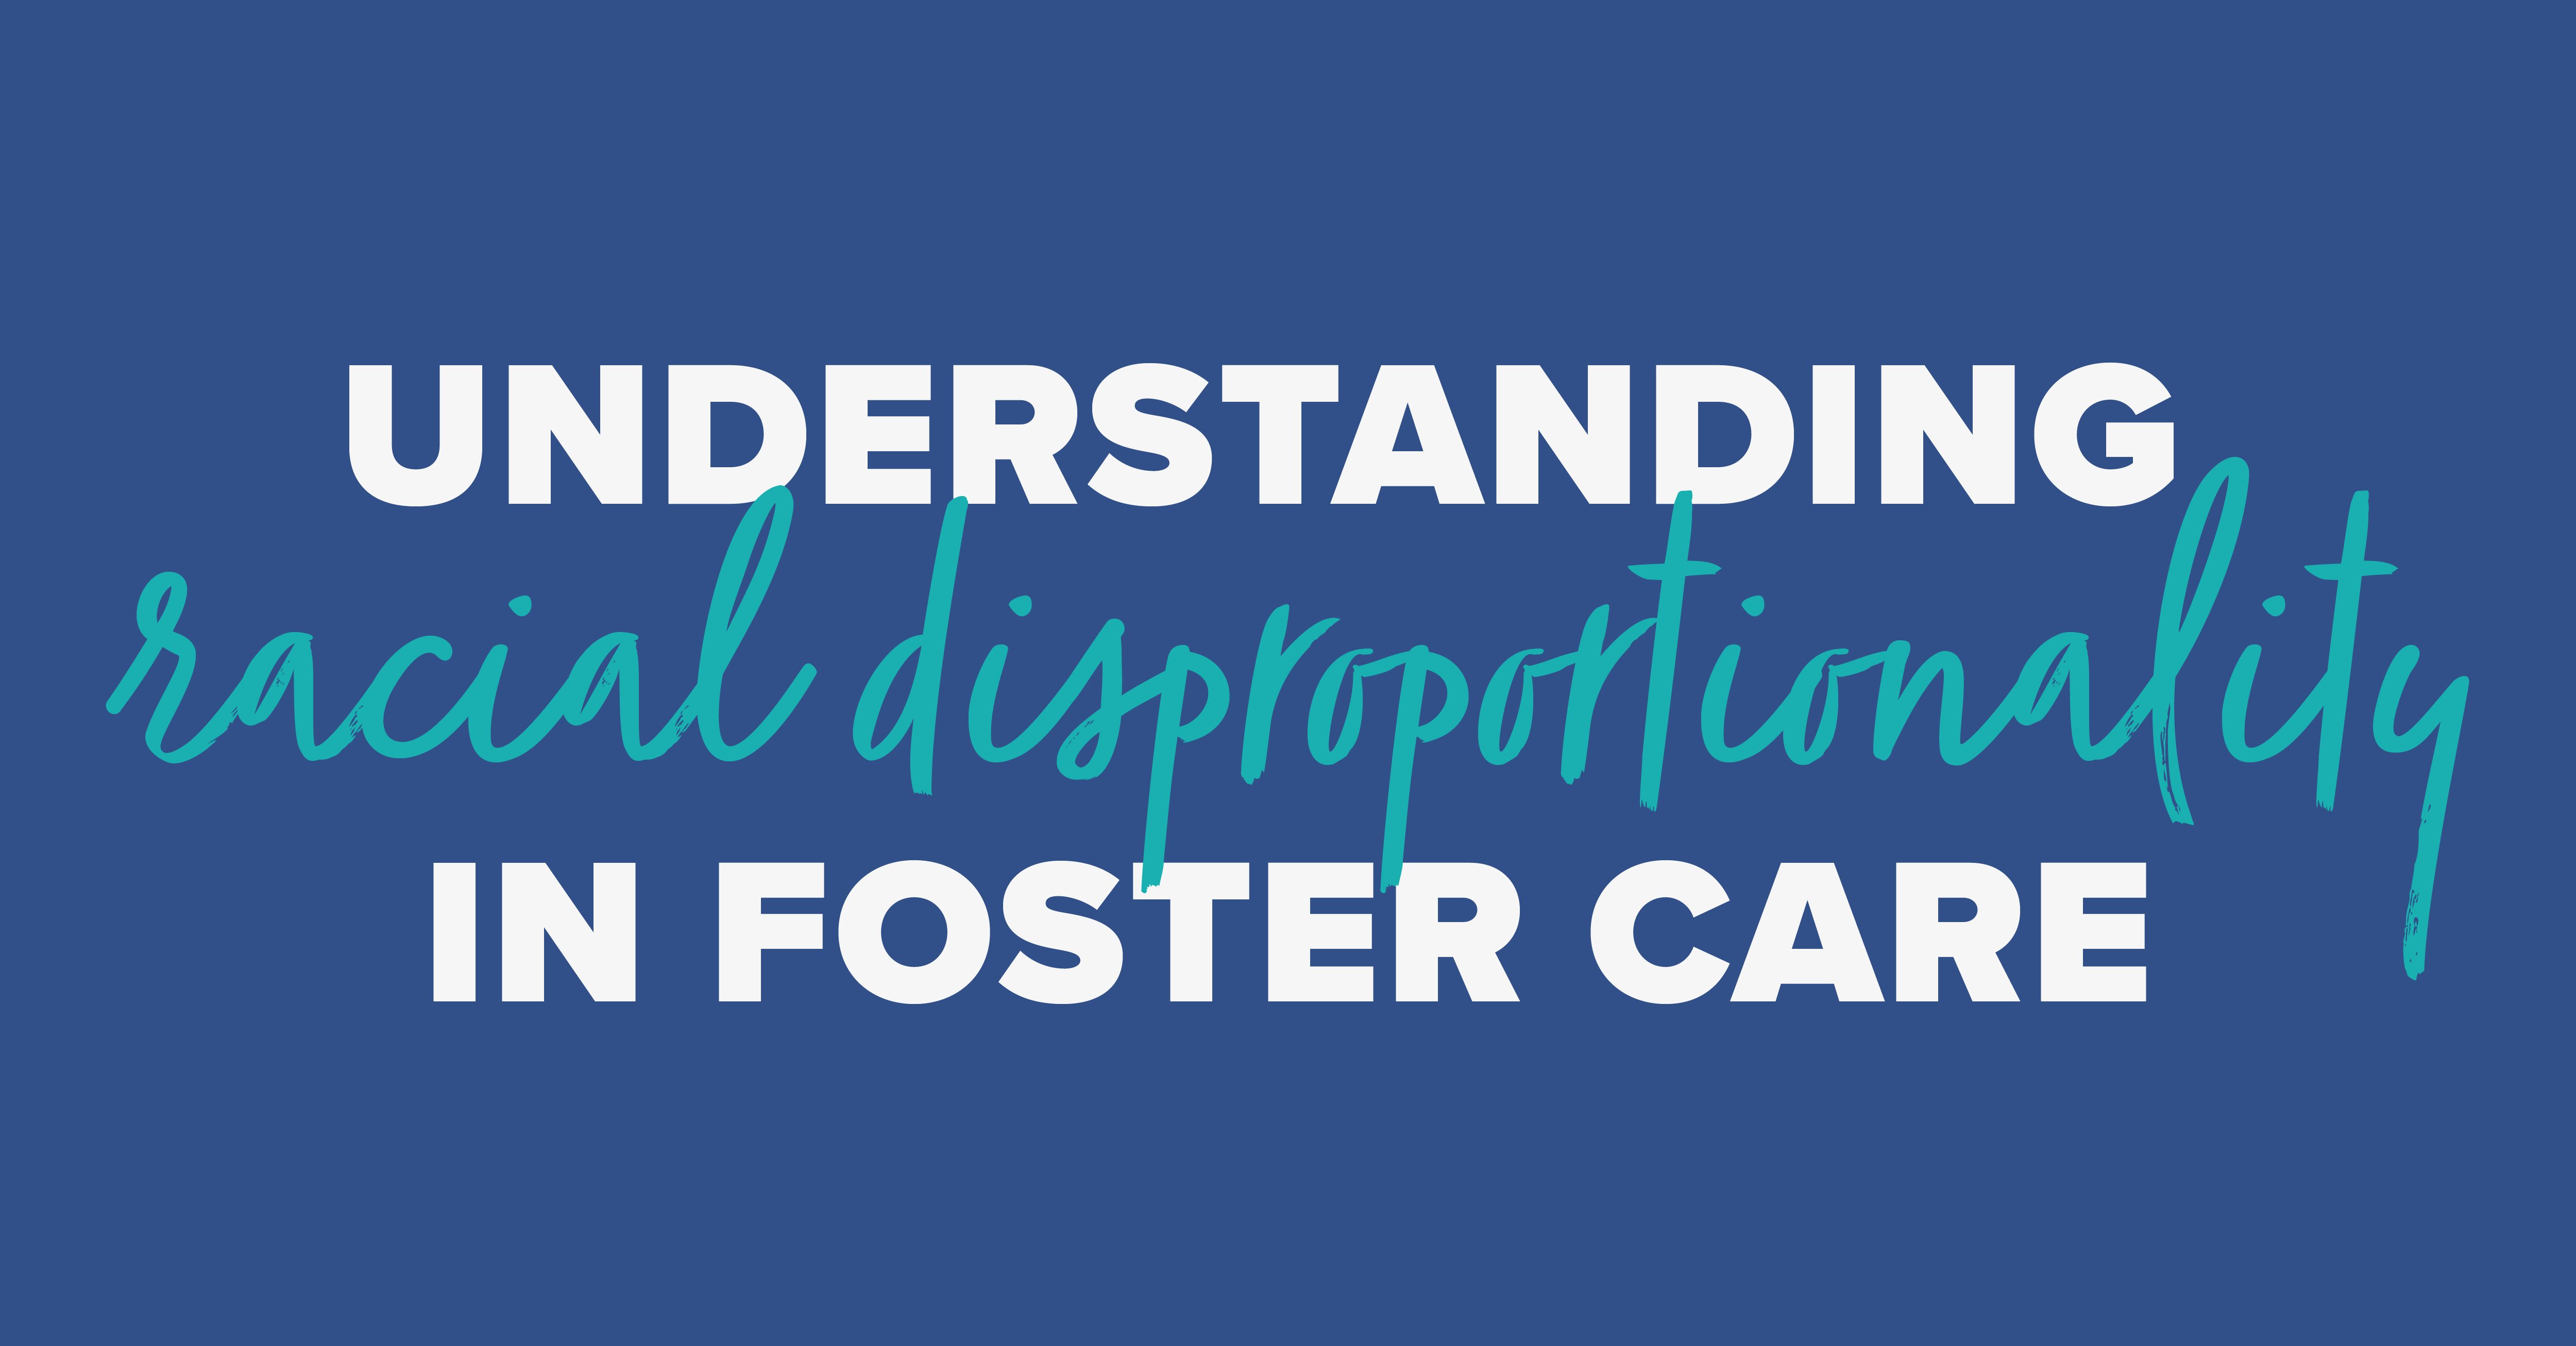 Understanding Racial Disproportionality in Foster Care